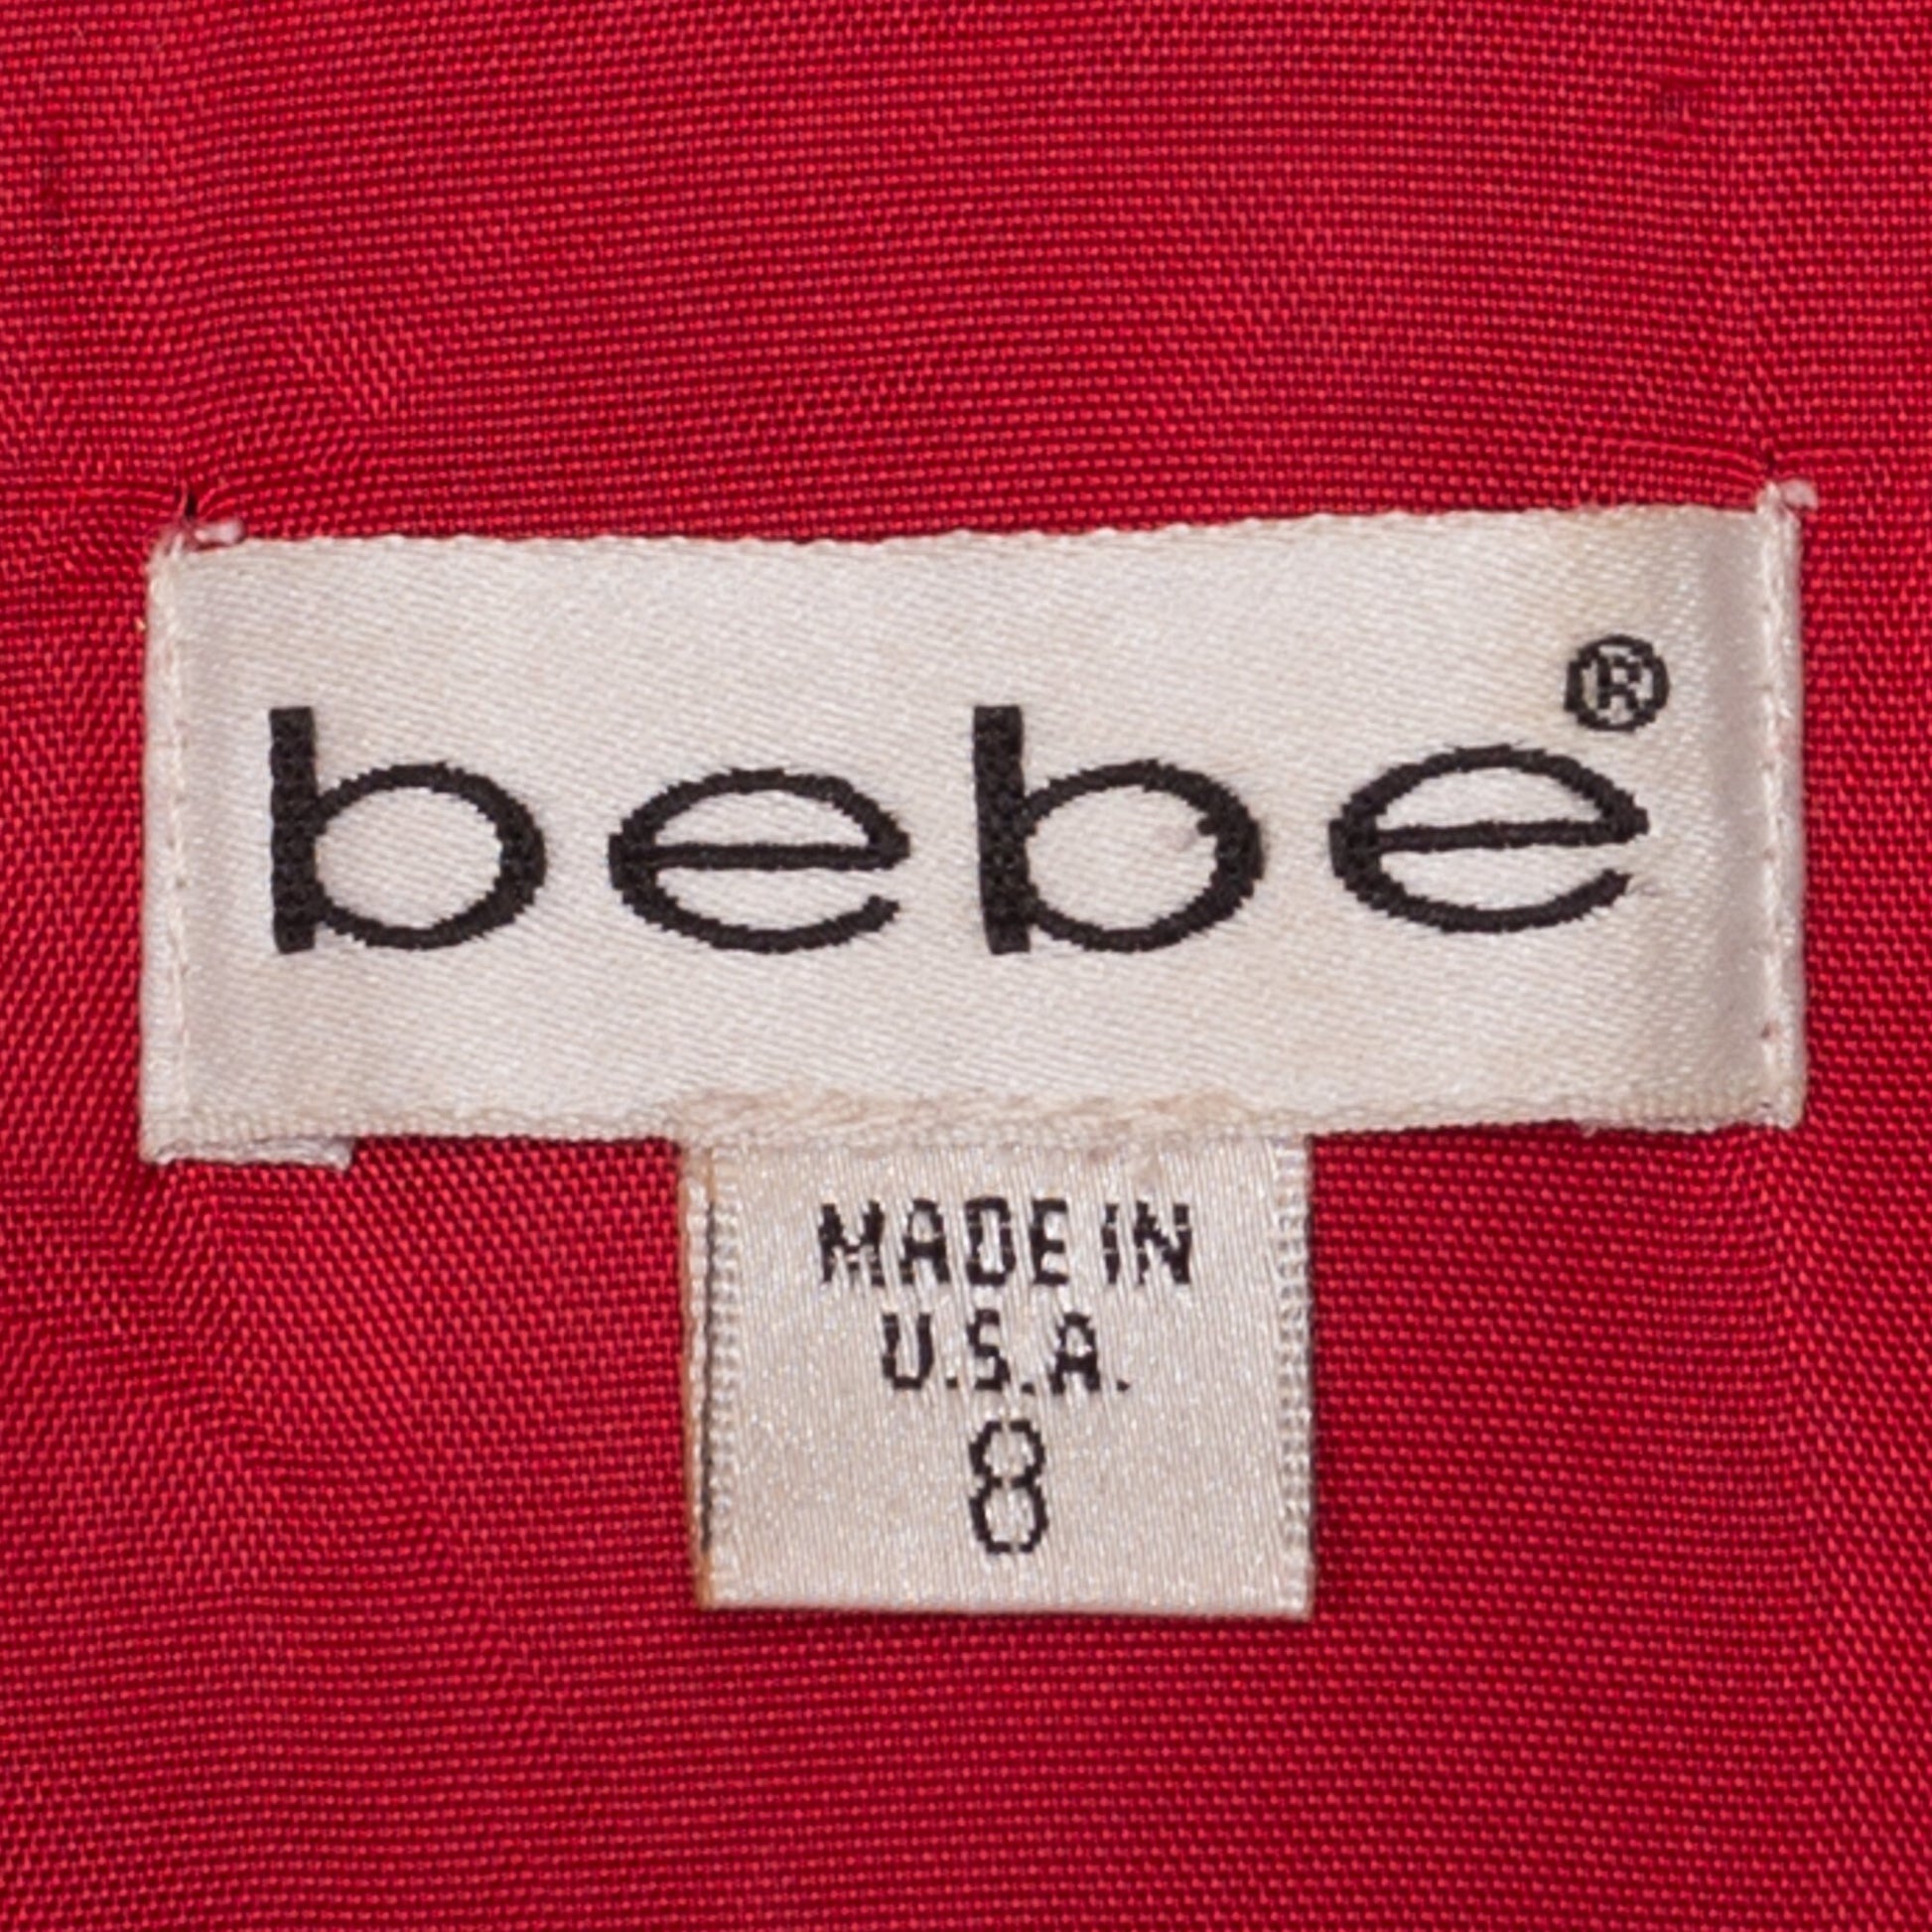 90s Bebe Red Cheongsam Mini Dress - Small to Medium